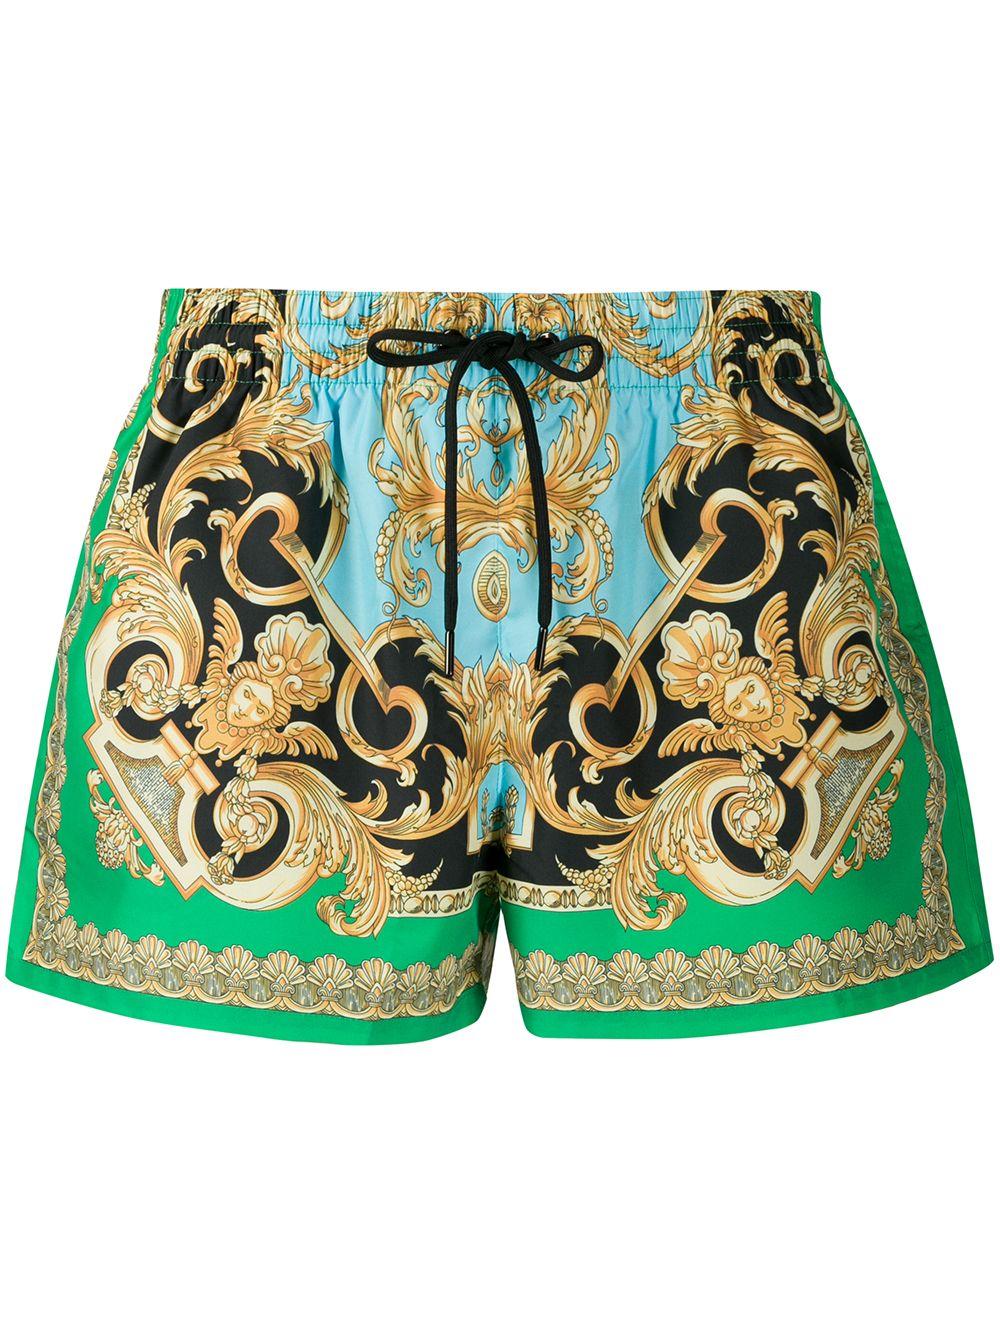 versace swim shorts green